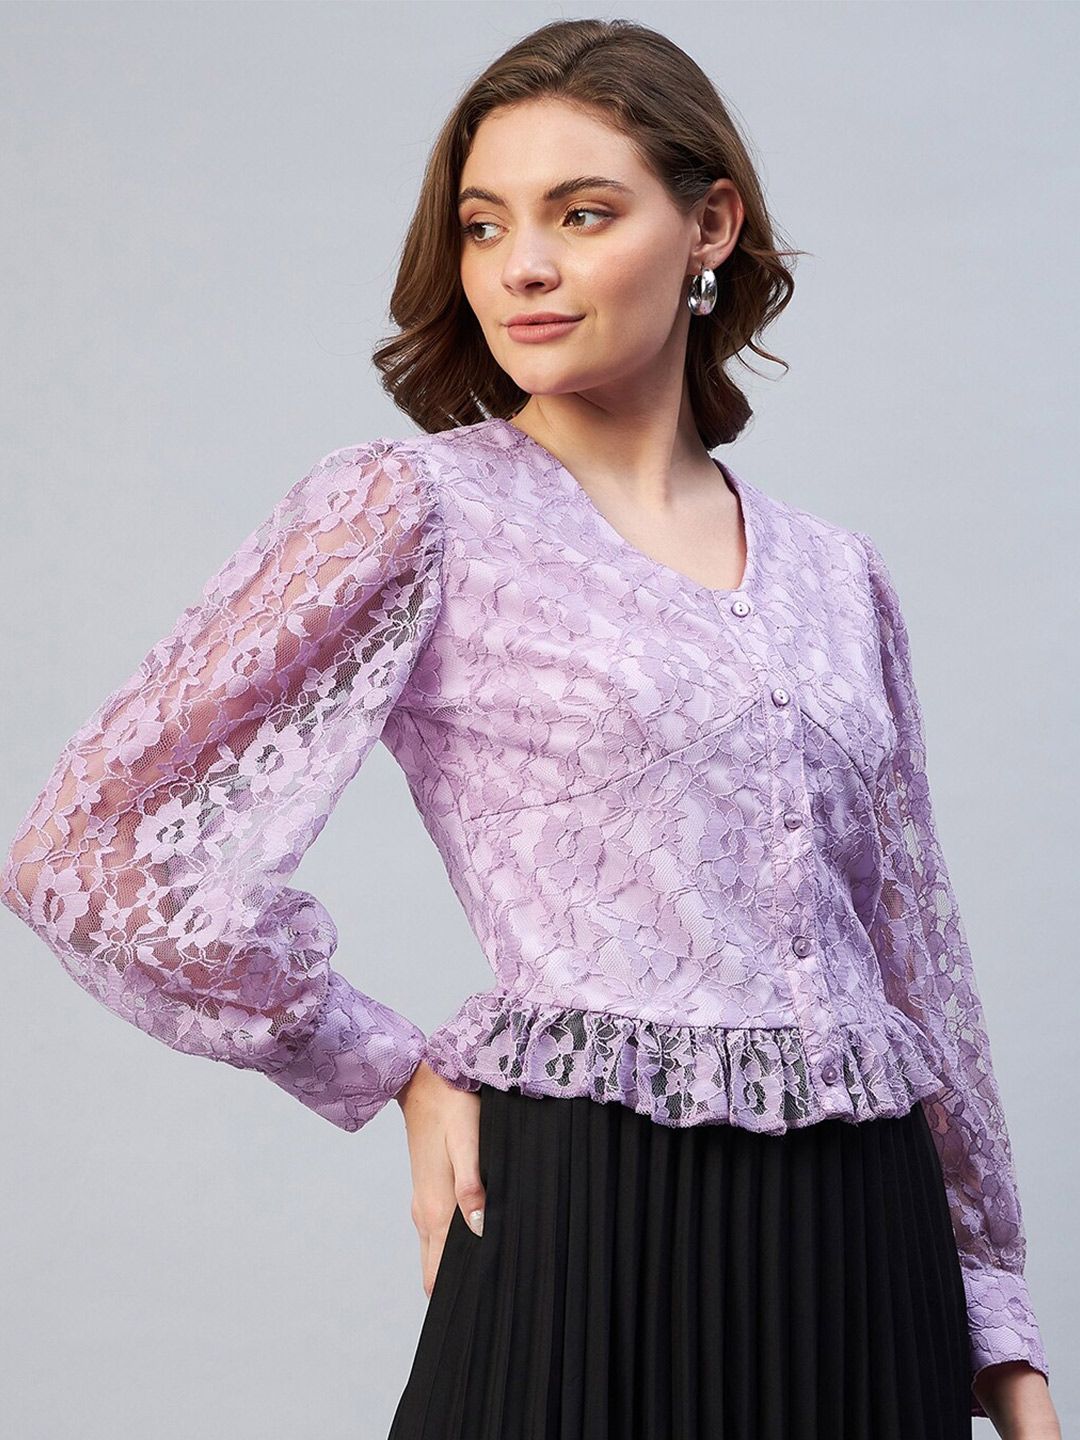 Marie Claire Purple Self Design Ruffles Lace Top Price in India